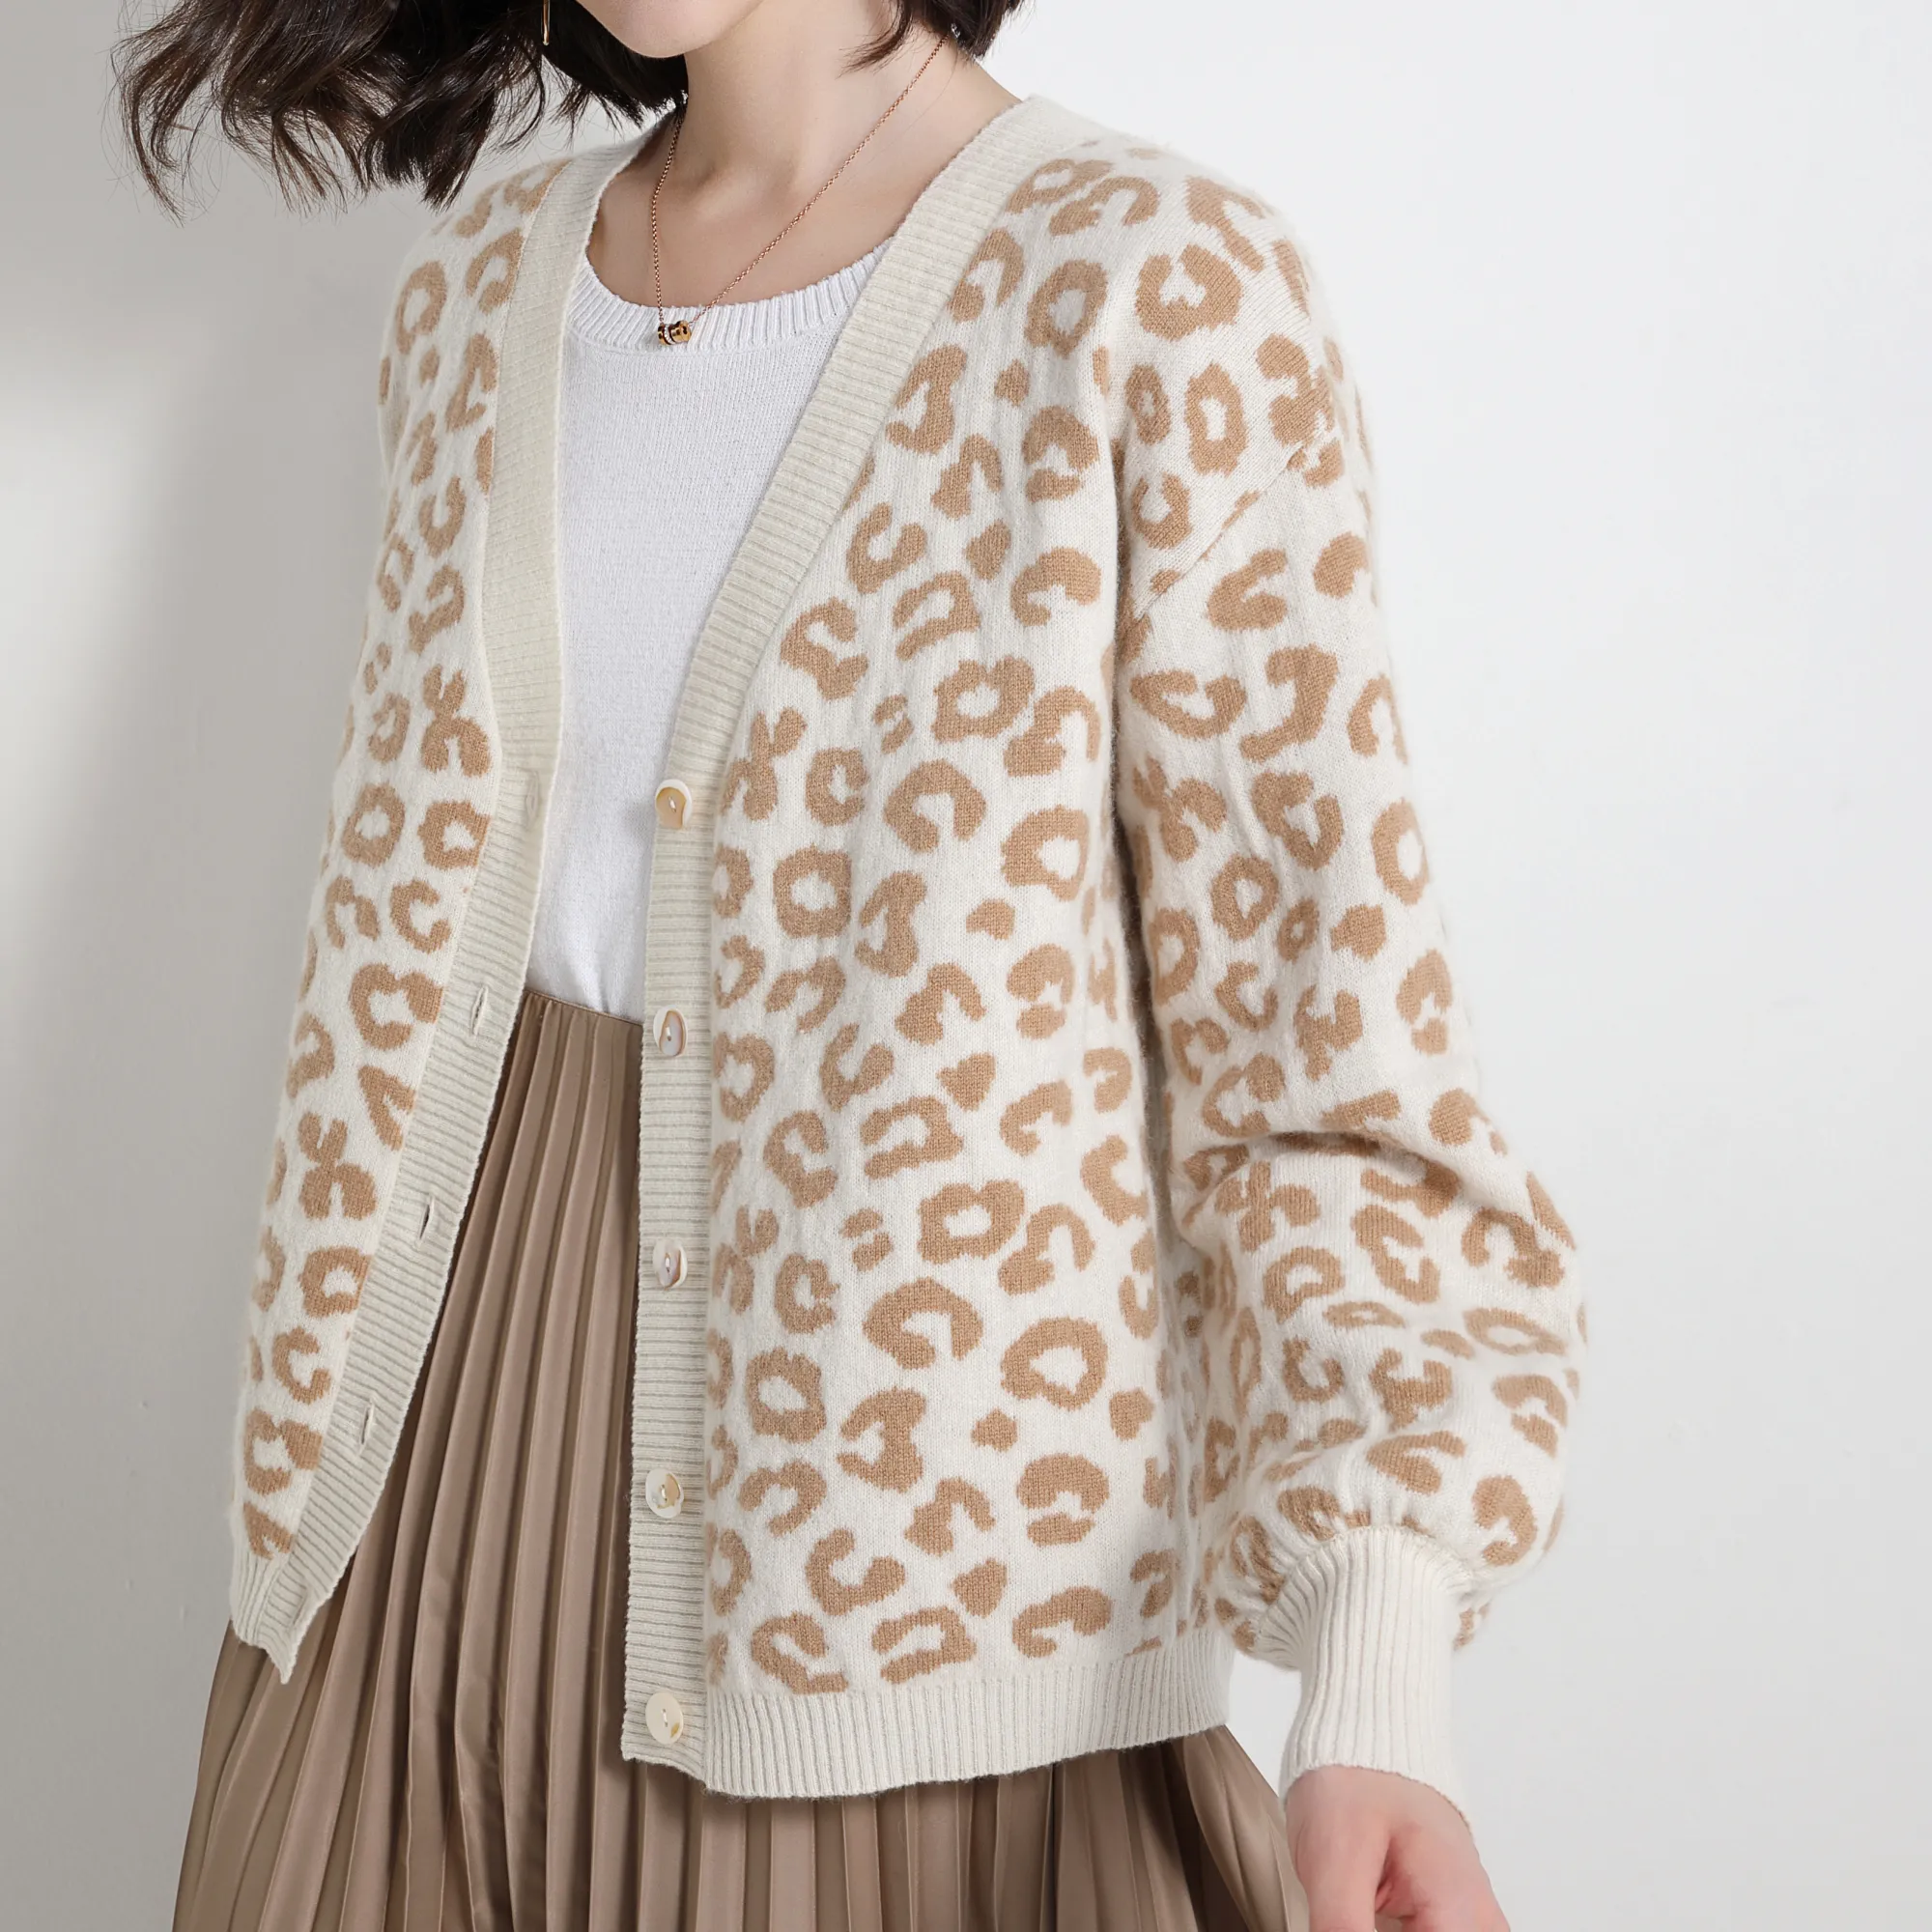 Kingsun OEM ODM v neck knitting wear leopard print customize design cashmere wool cardigans sweater